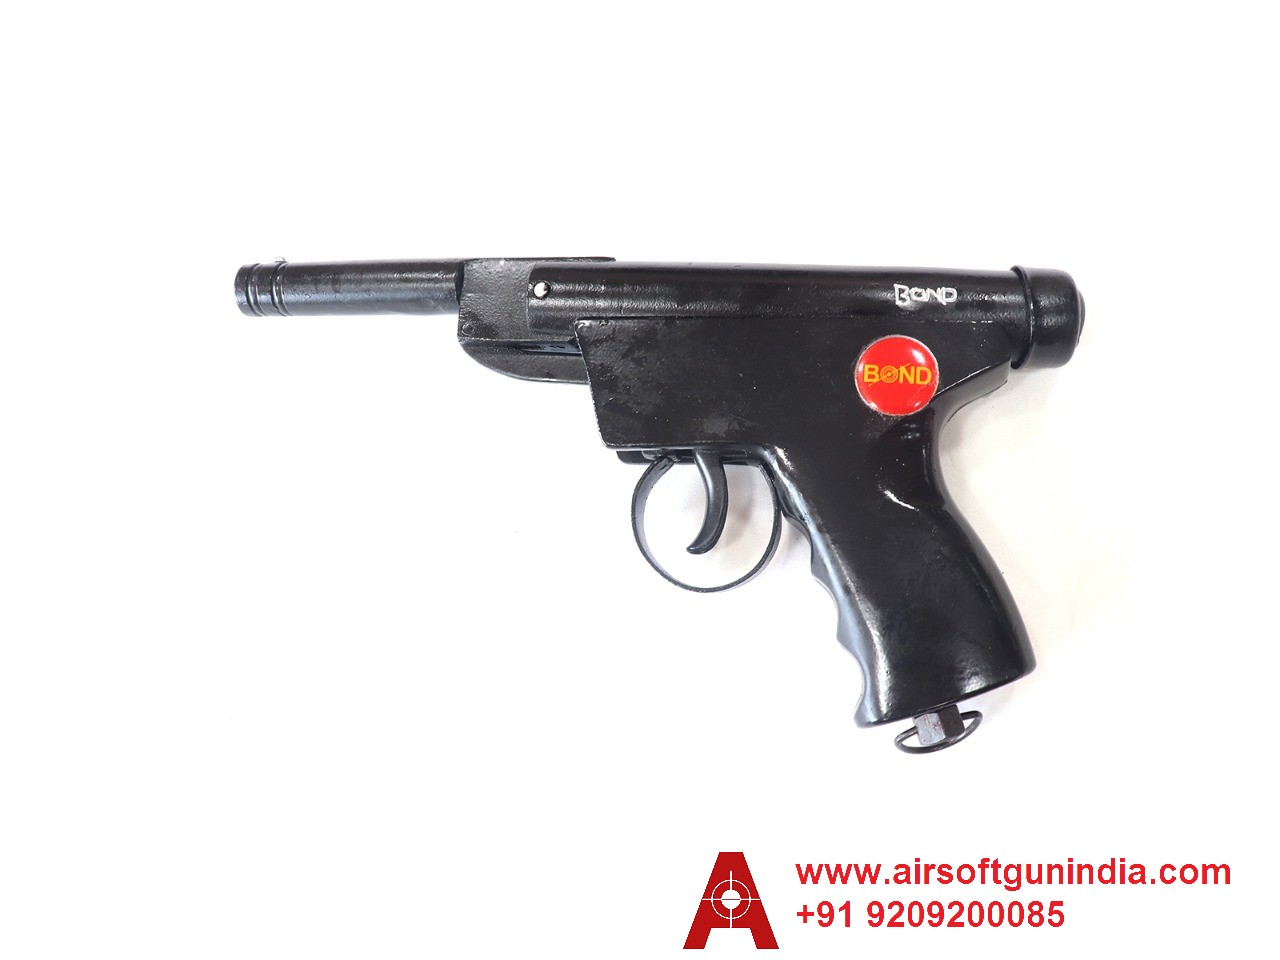 Bond Series 1 Metal Single-Shot .177 Caliber / 4.5 Mm Indian Air Pistol By Airsoft Gun India